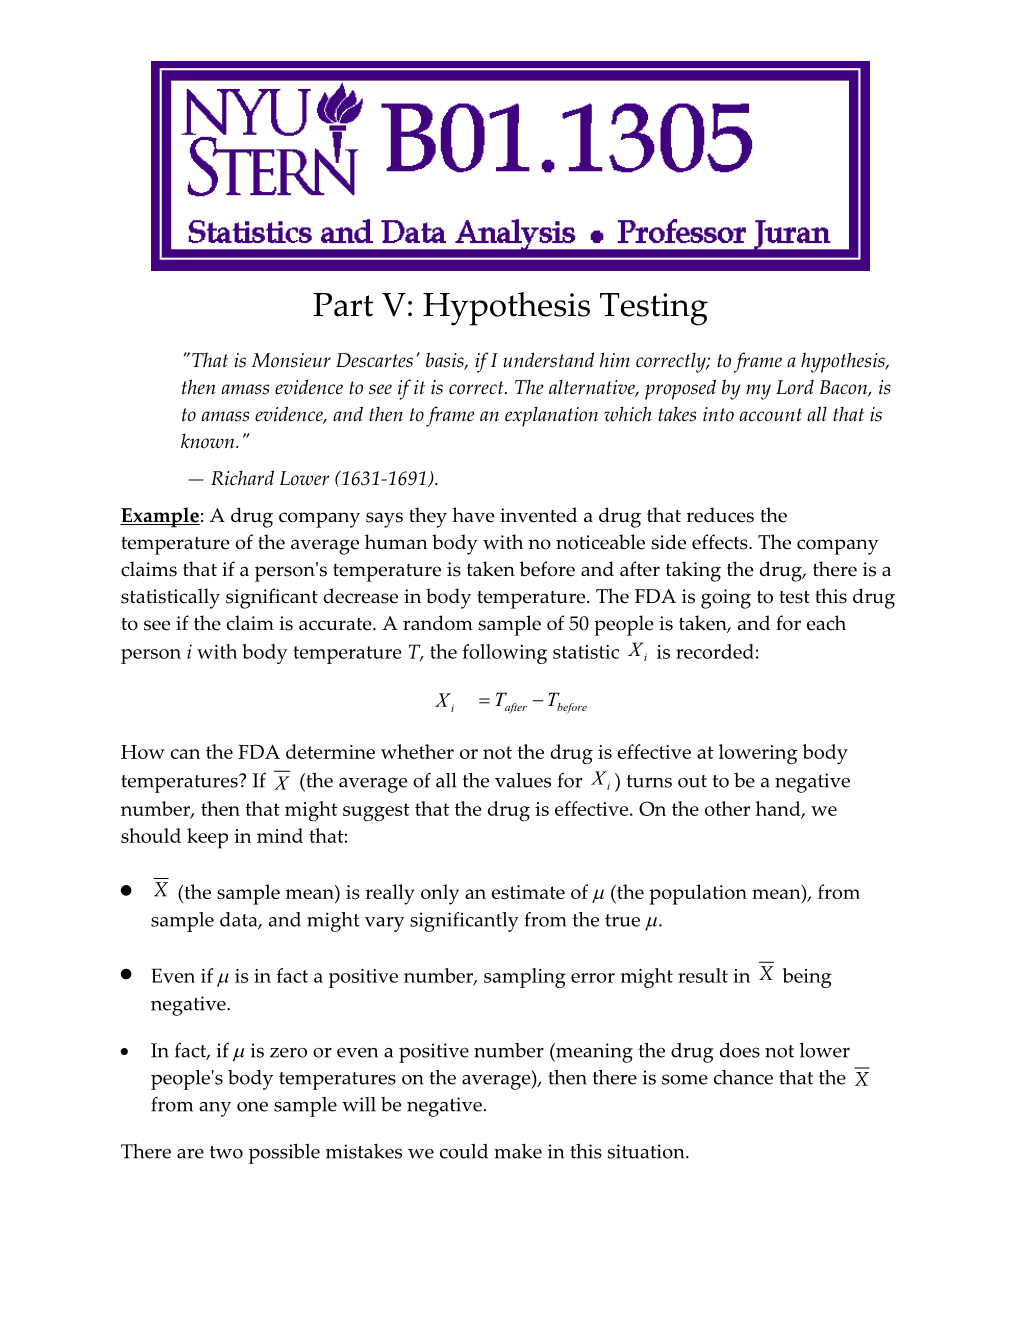 Part V: Hypothesis Testing